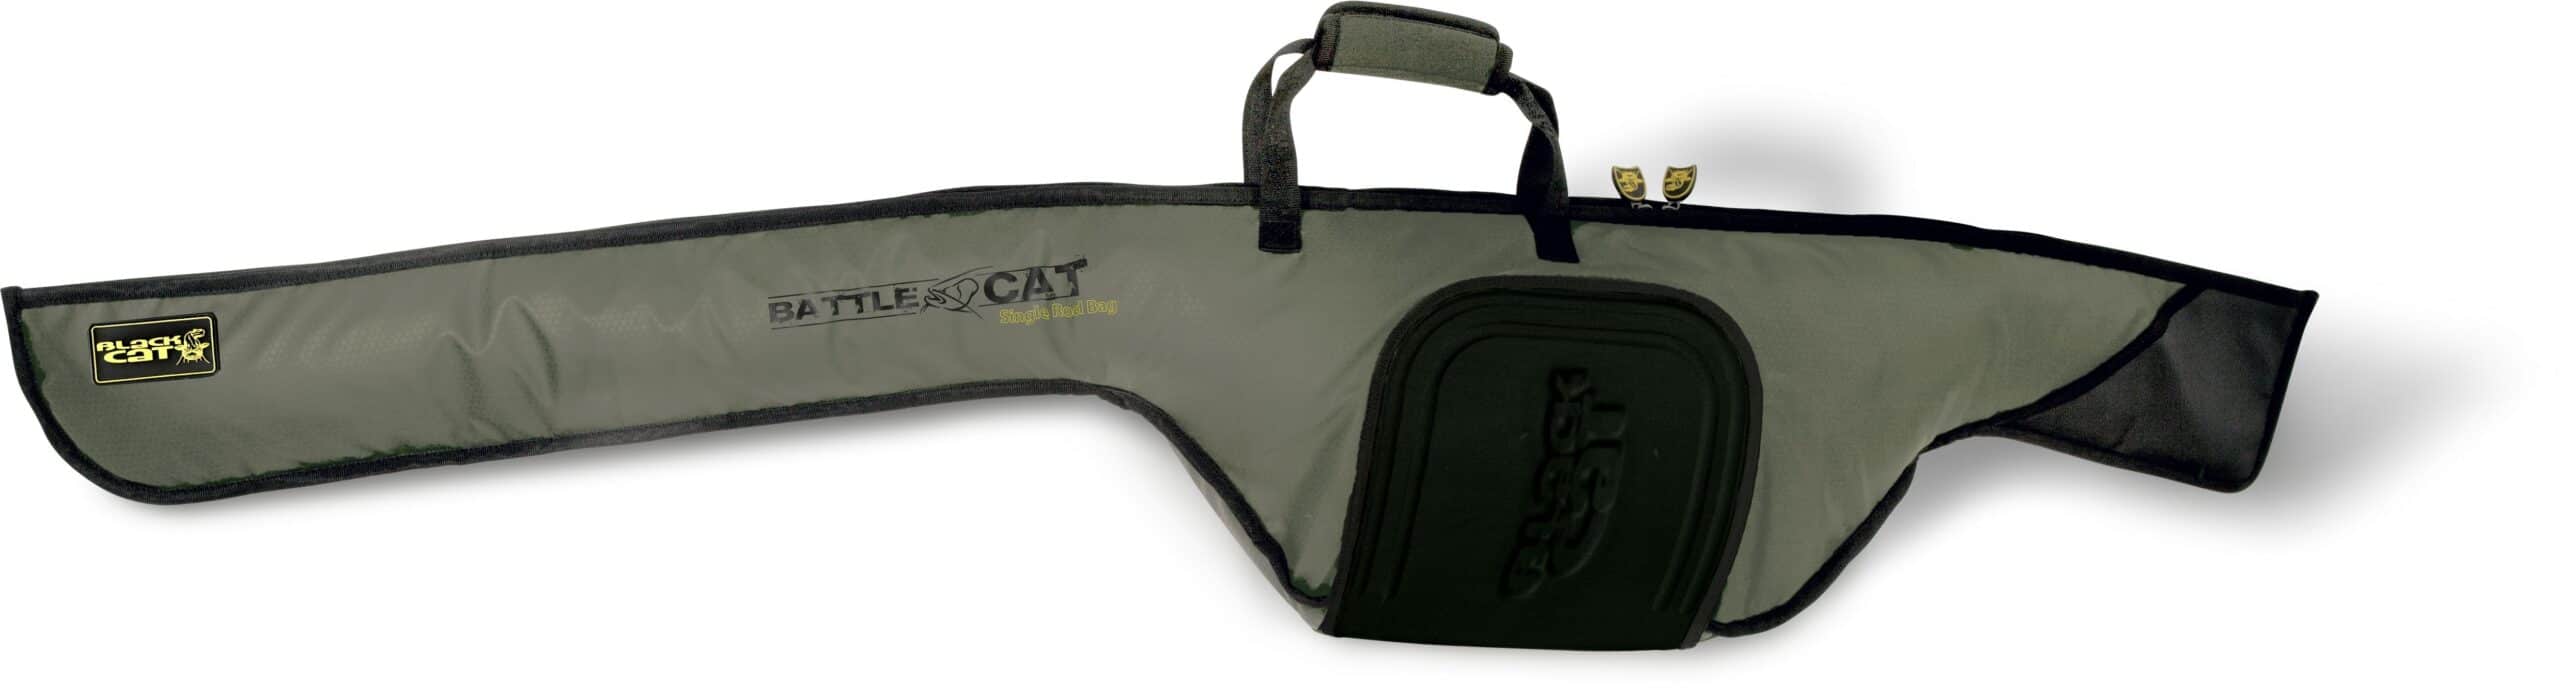 Black Cat Battle Cat Single Rod Bag